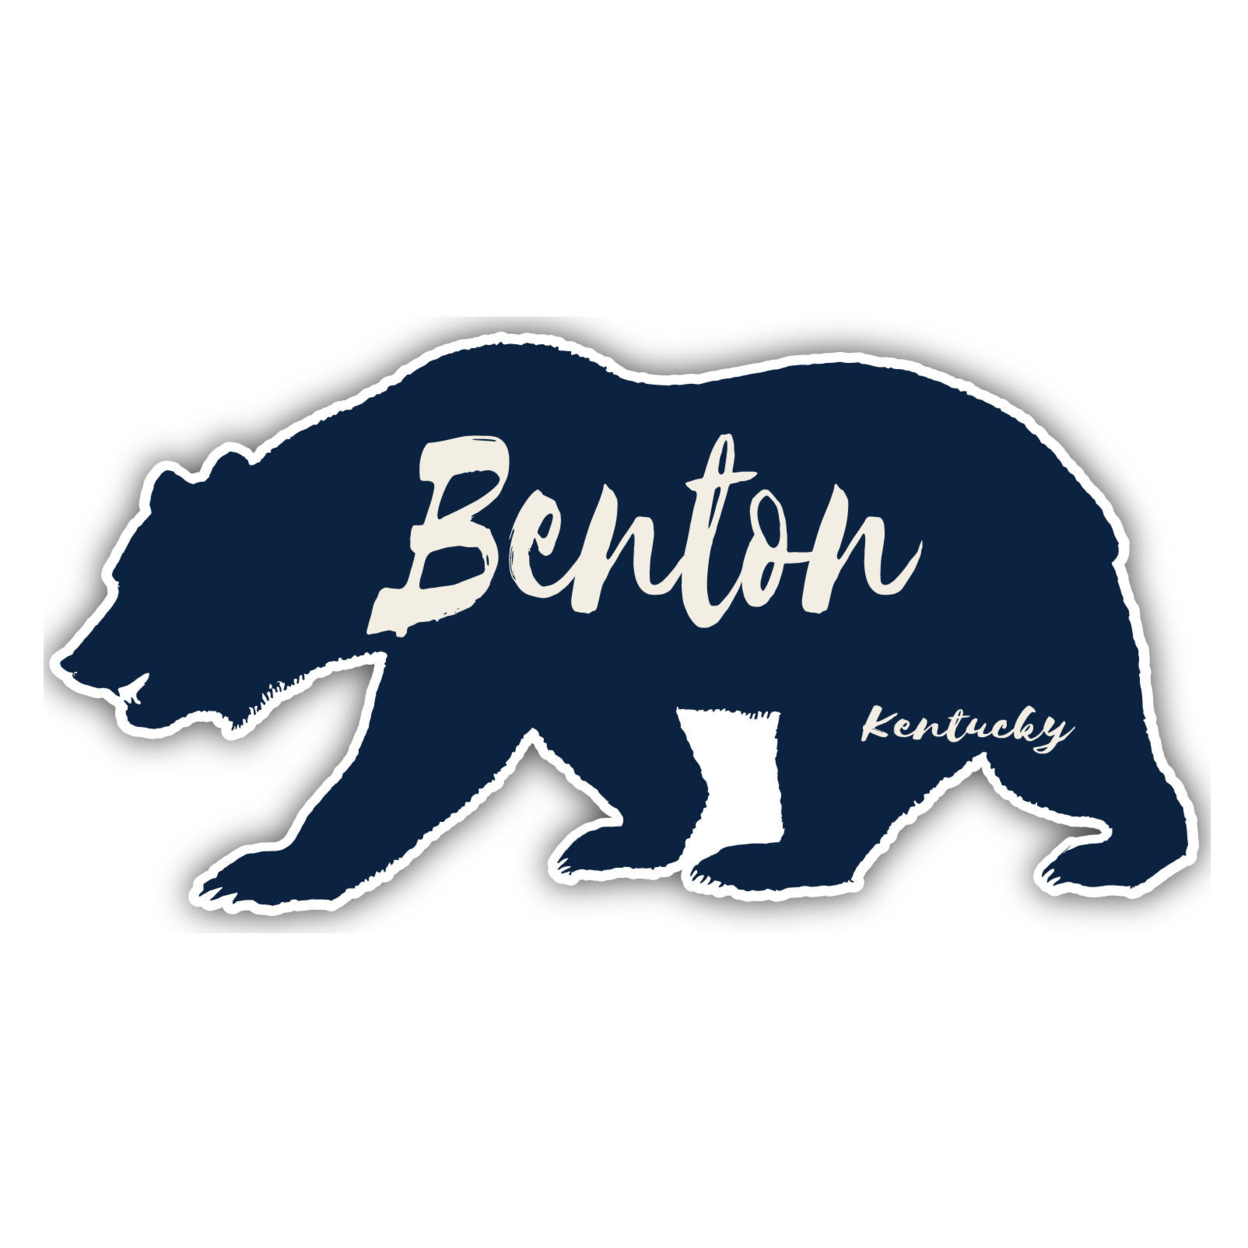 Benton Kentucky Souvenir Decorative Stickers (Choose Theme And Size) - Single Unit, 6-Inch, Bear